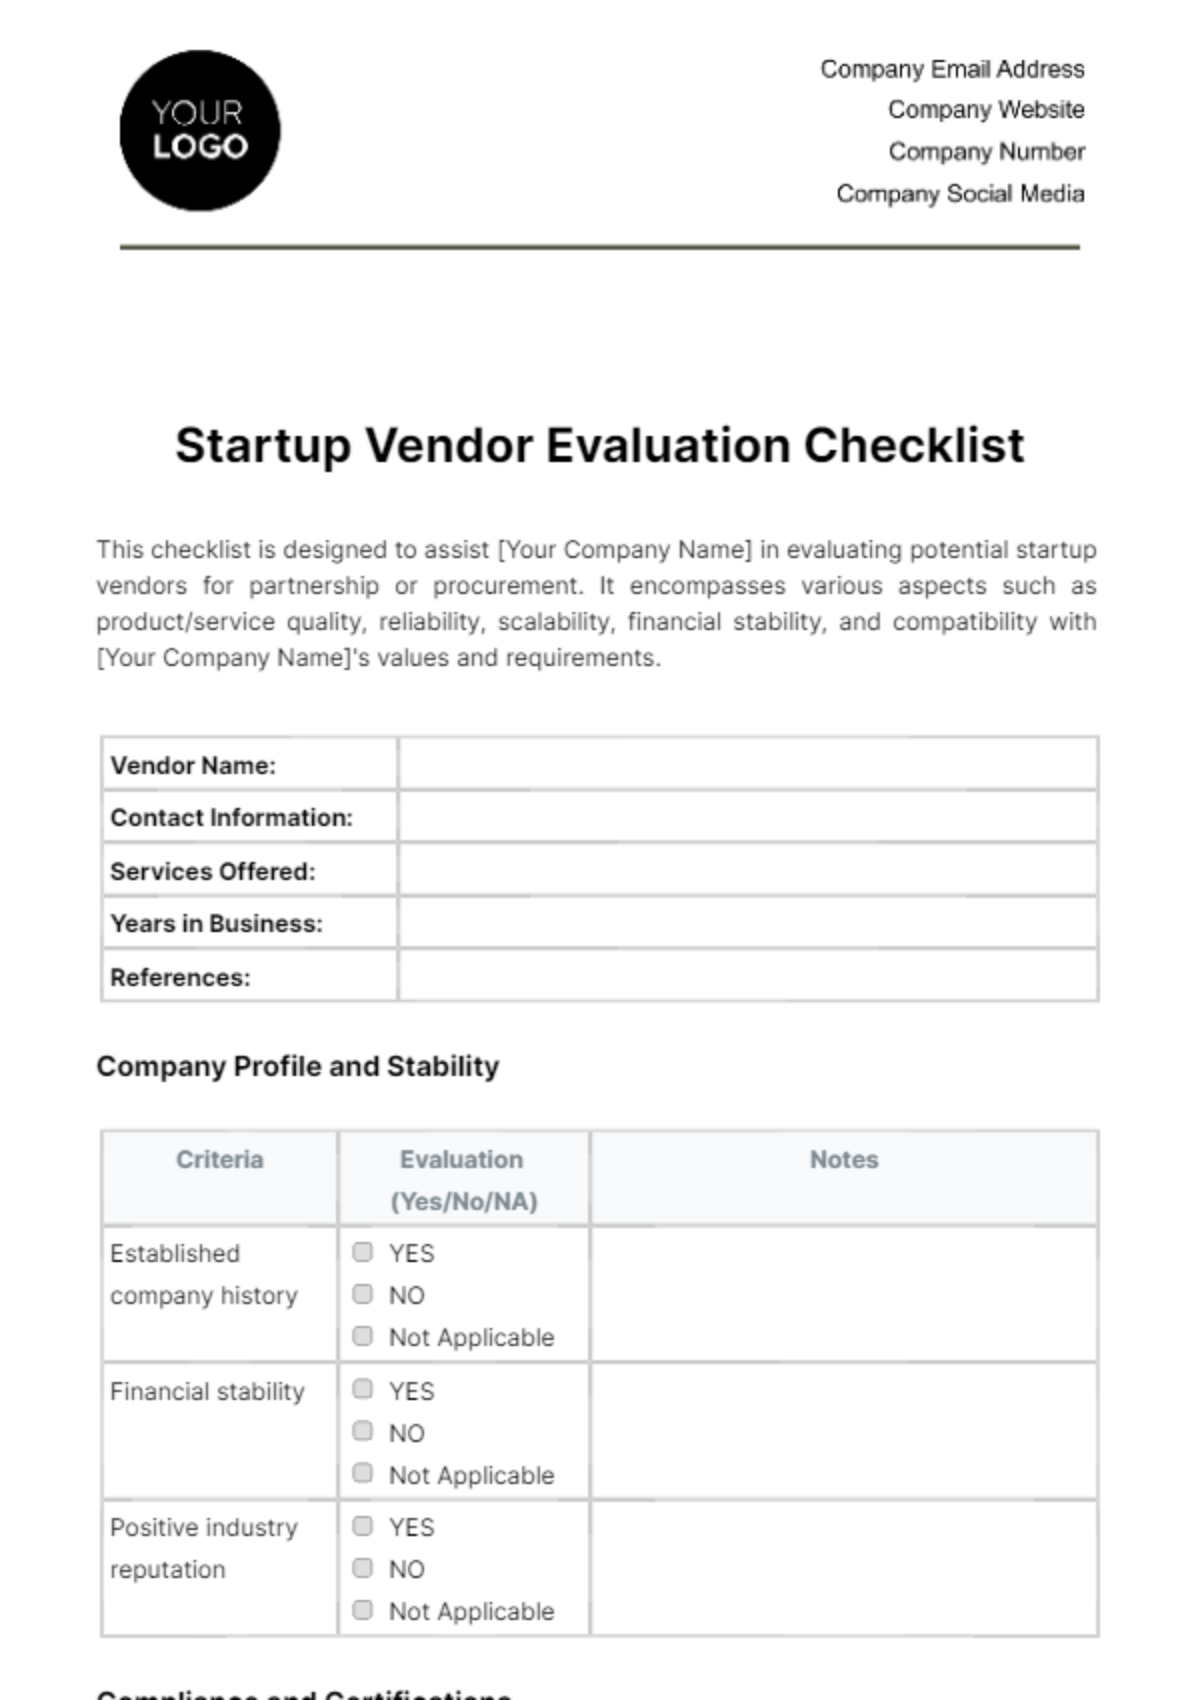 Startup Vendor Evaluation Checklist Template